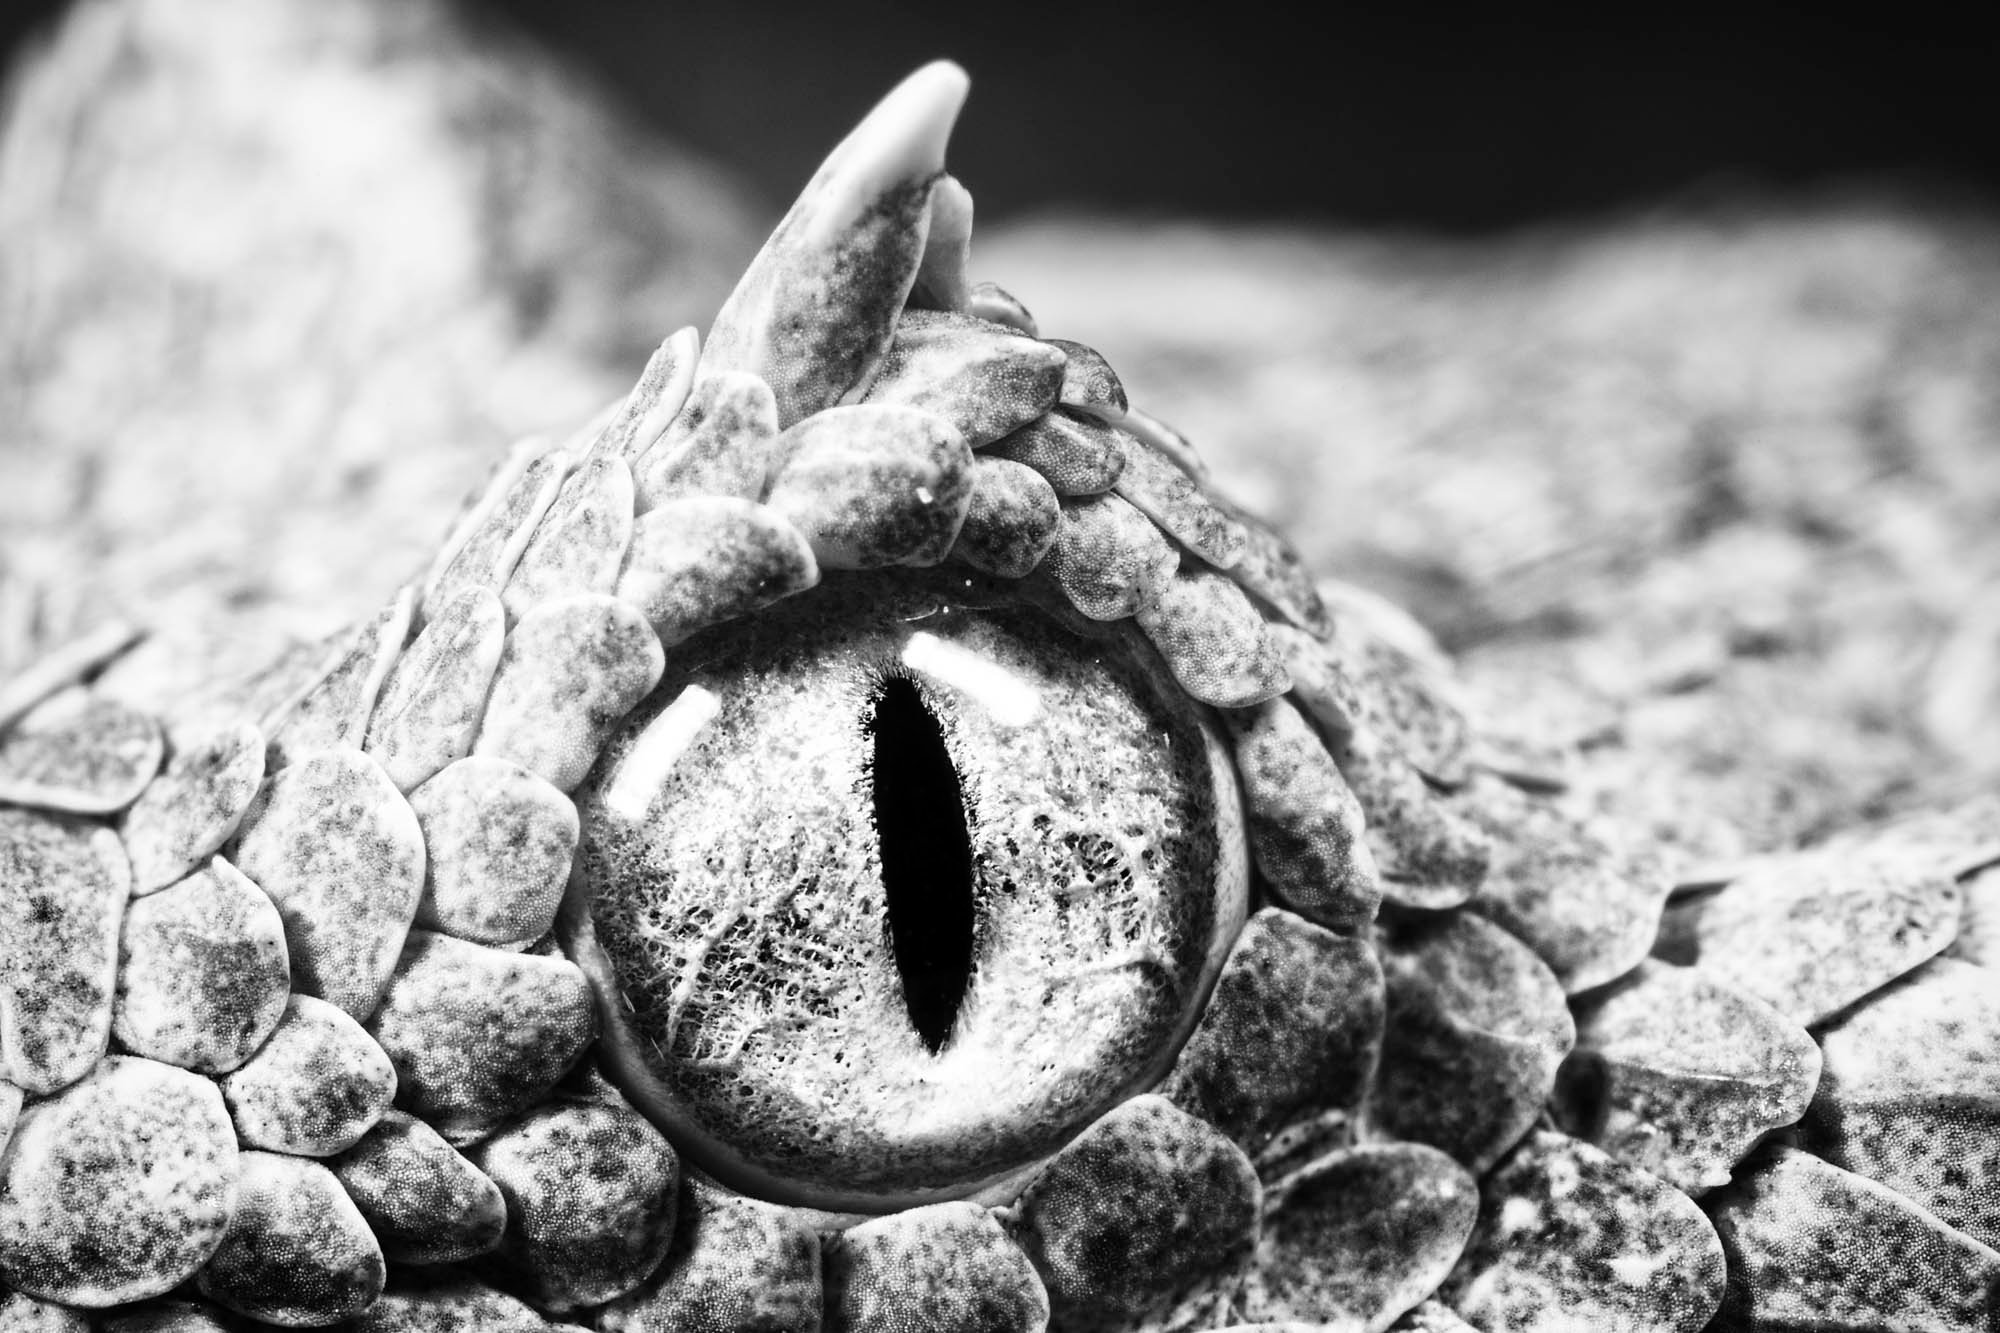 Macro photo of poisonous horned adder snake eye. Photo by Heinrich van den Berg using the Canon EF-M 65mm f/2.8 Macro Lens.